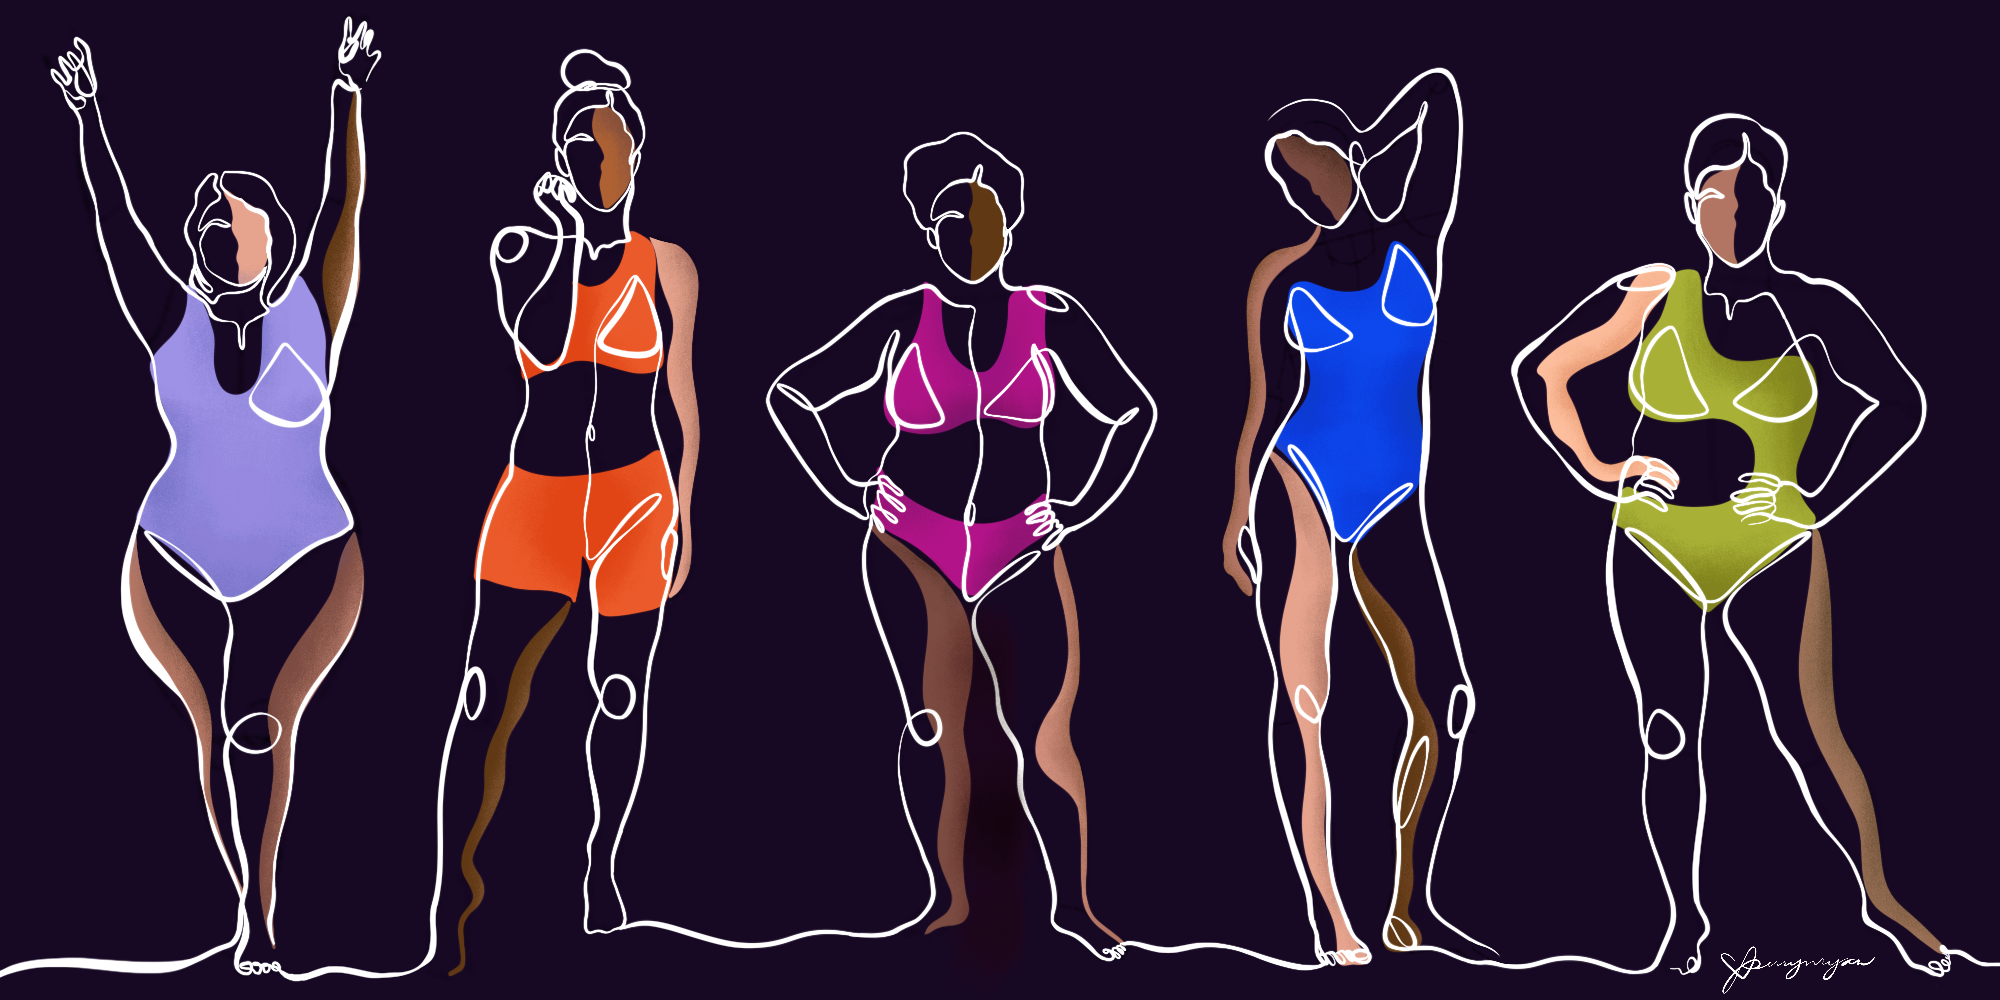 Fashion, Beauty, Body Positivity, Lifestyle, Pop Culture: What Body  Shape & Body Type Am I?